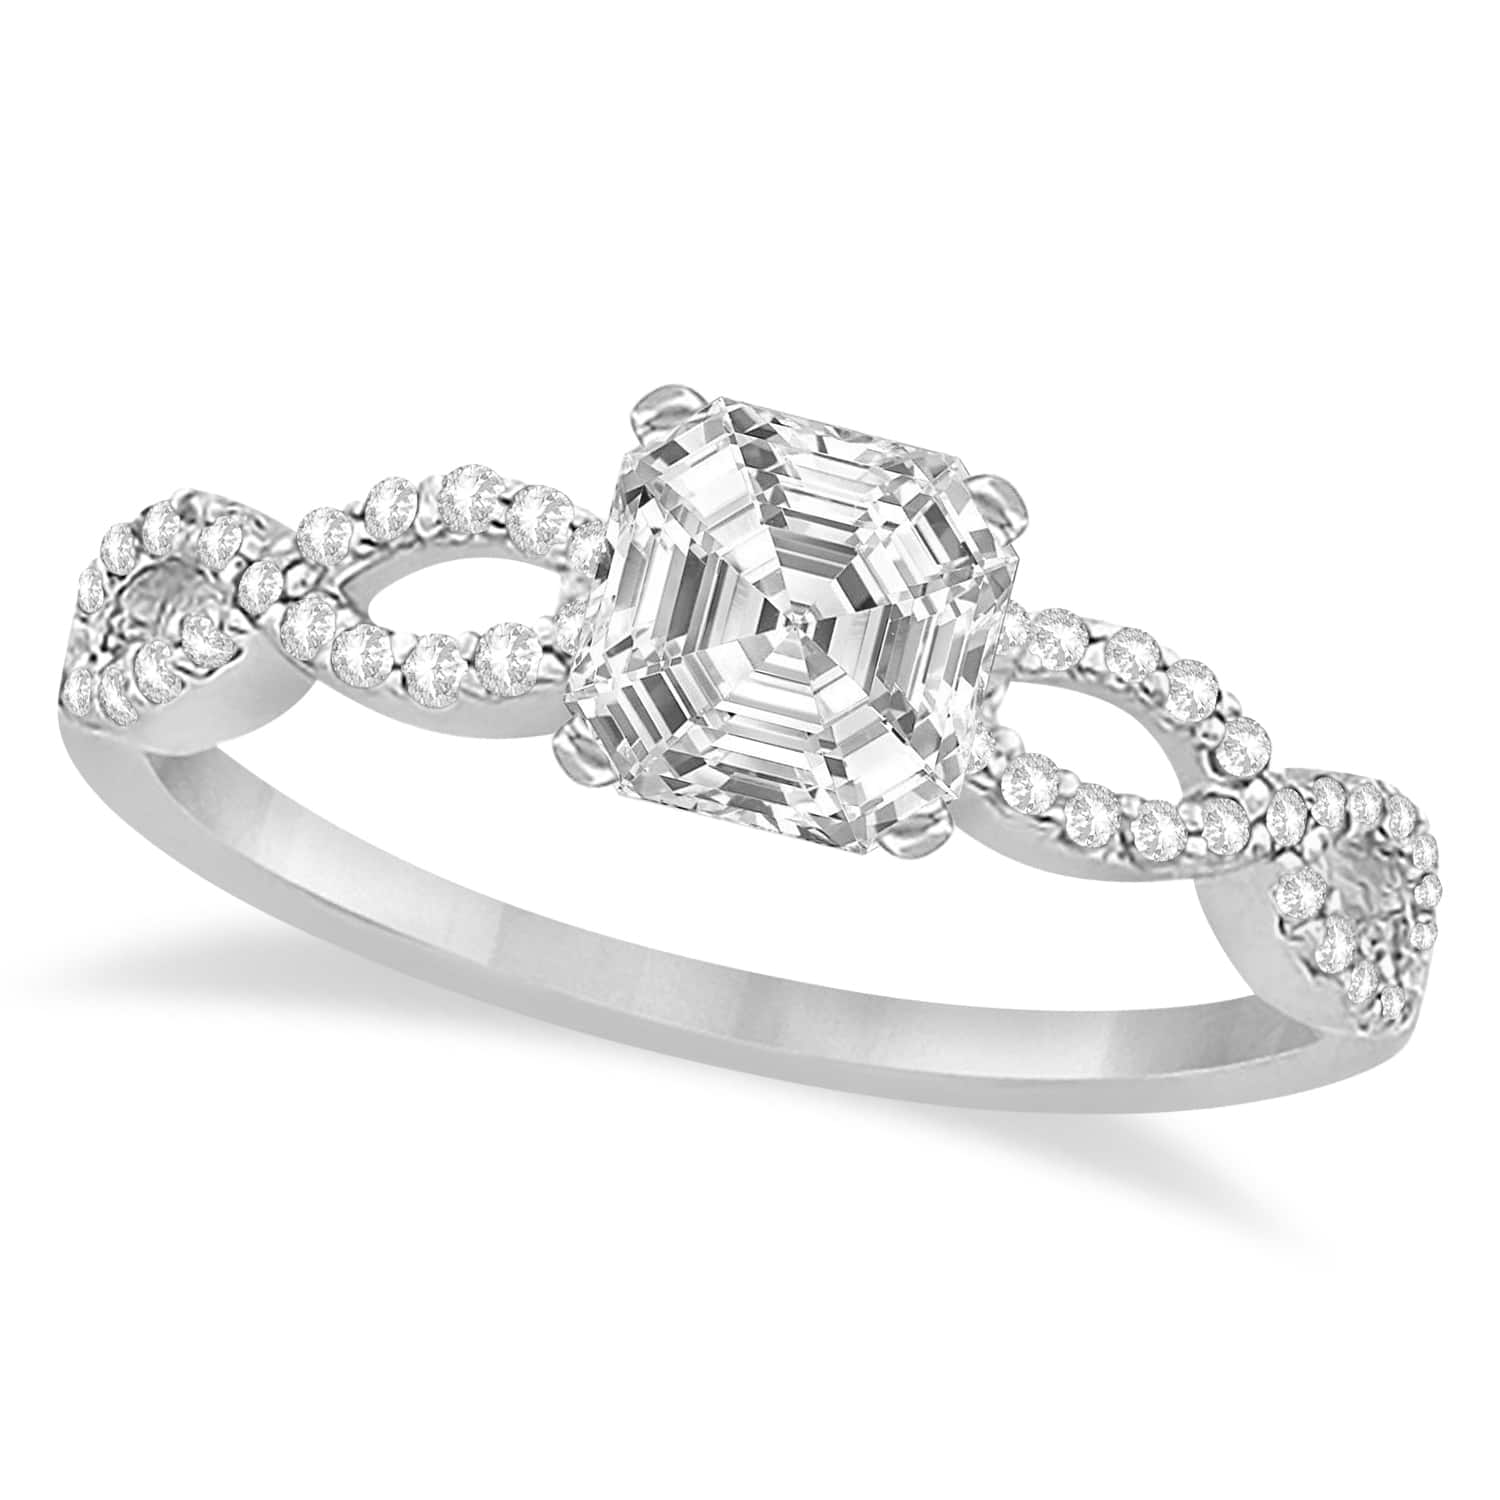 Infinity Asscher-Cut Lab Grown Diamond Engagement Ring 14k White Gold (0.50ct)